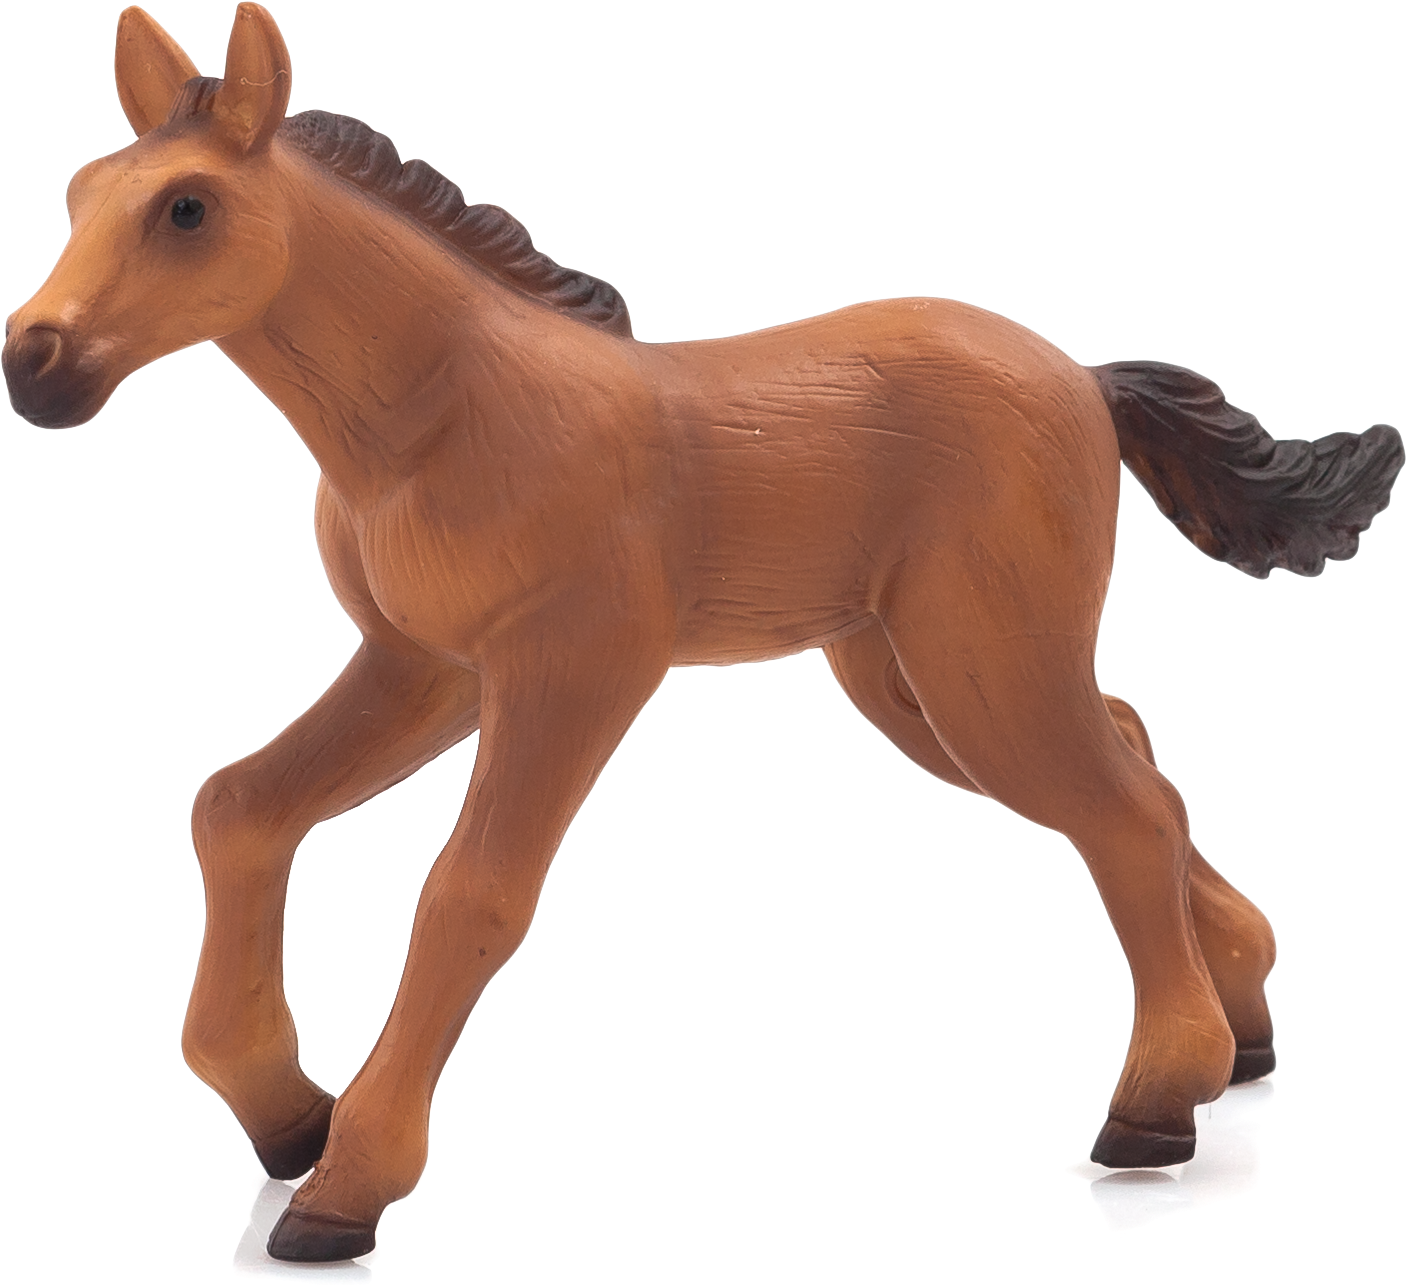 A Brown Horse Figurine